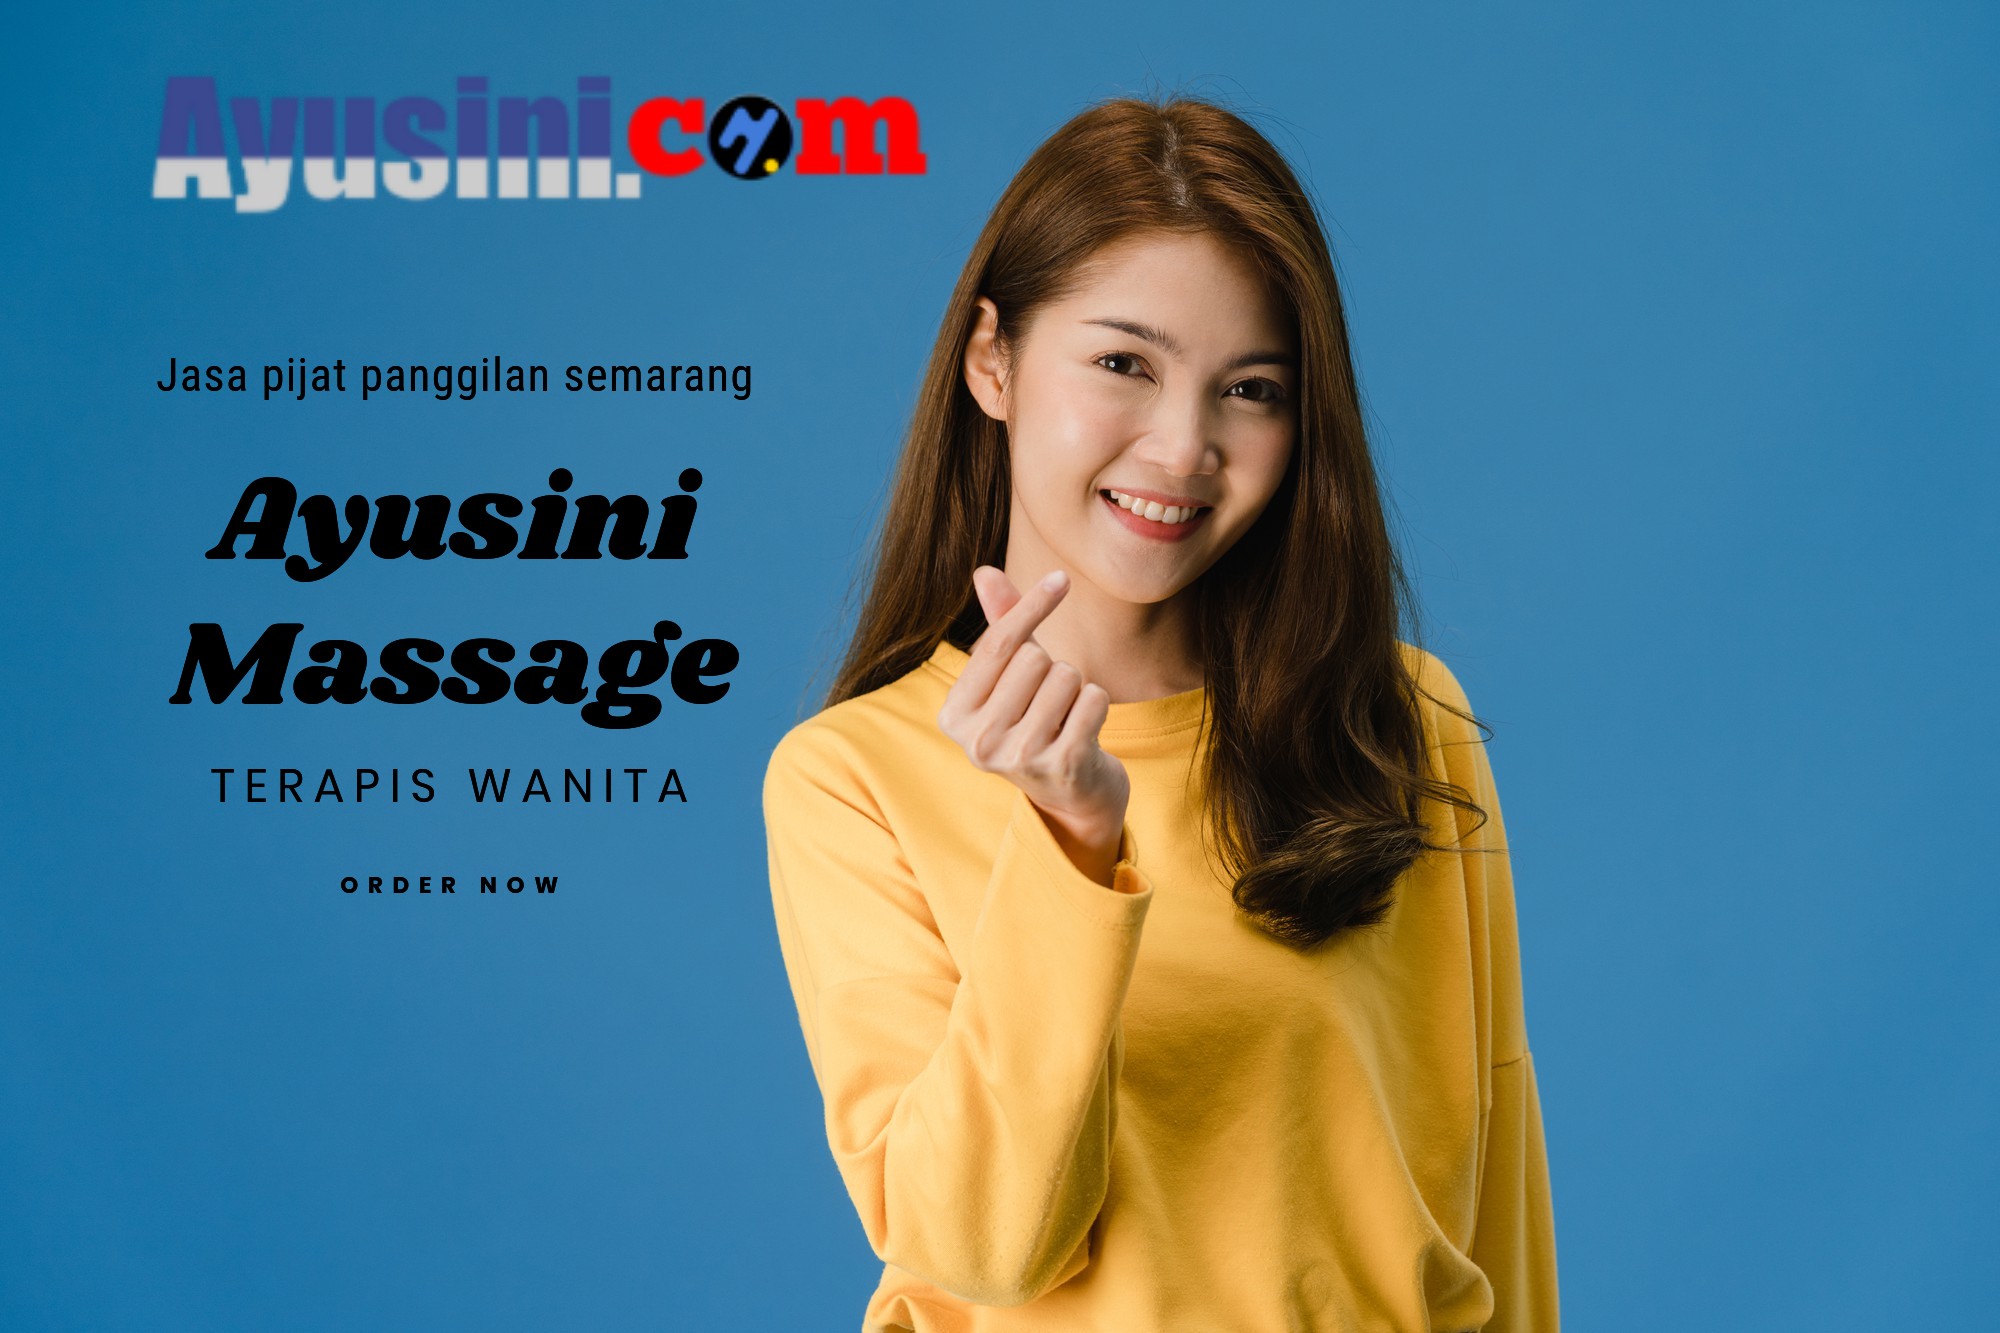 Jasa Pijat Panggilan Semarang 24 Jam Online Plus Terapis Wanita Terampil